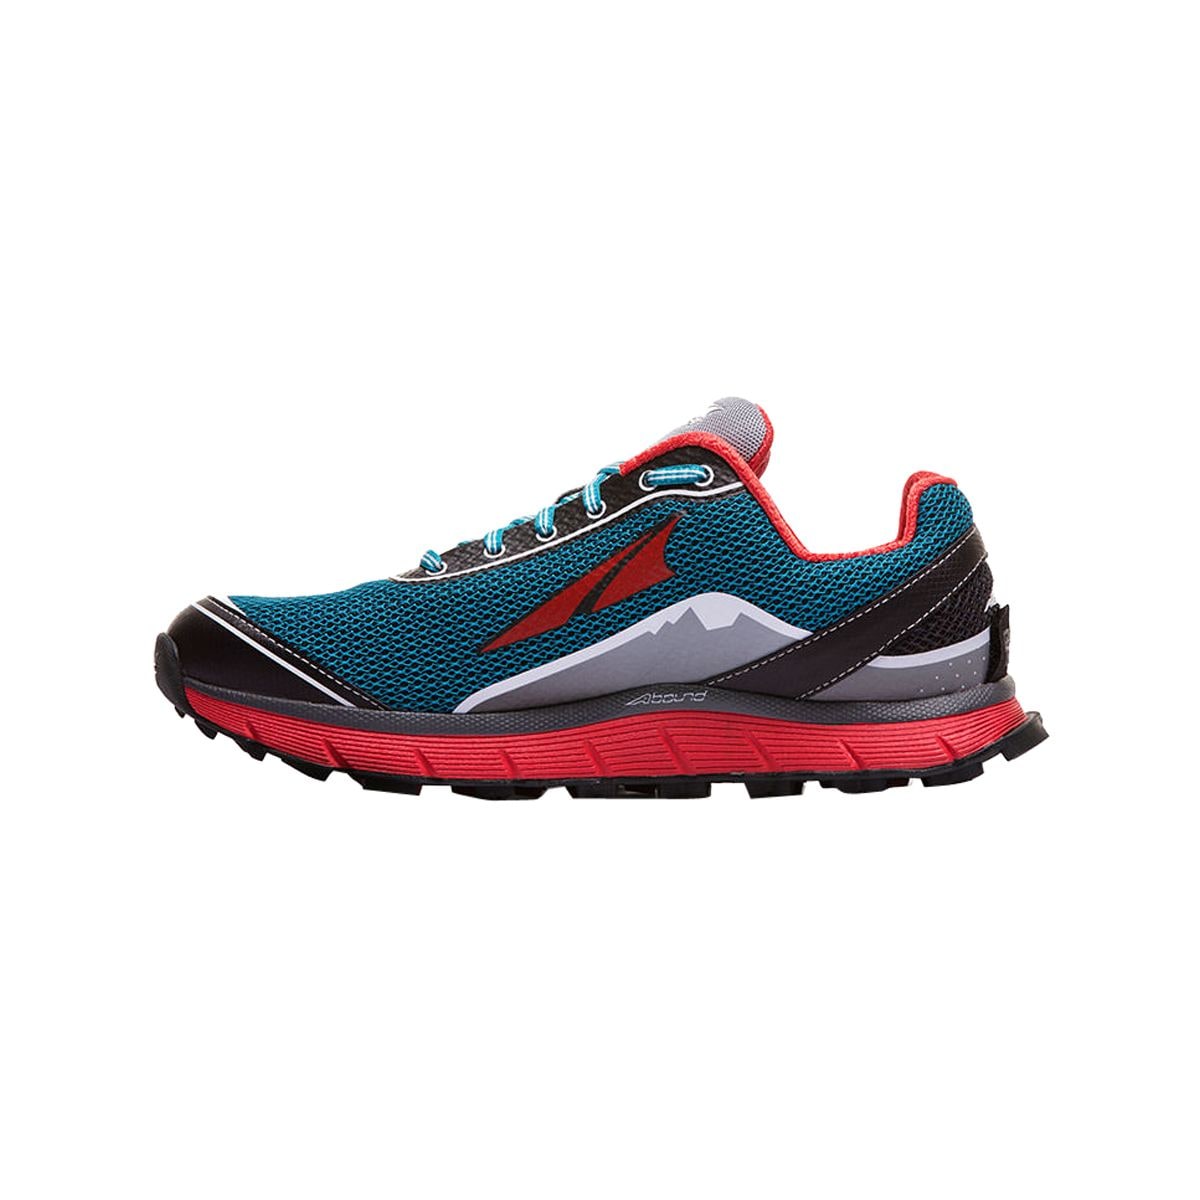 Altra Lone Peak 2.5 Trail Running Shoe - Women's | eBay